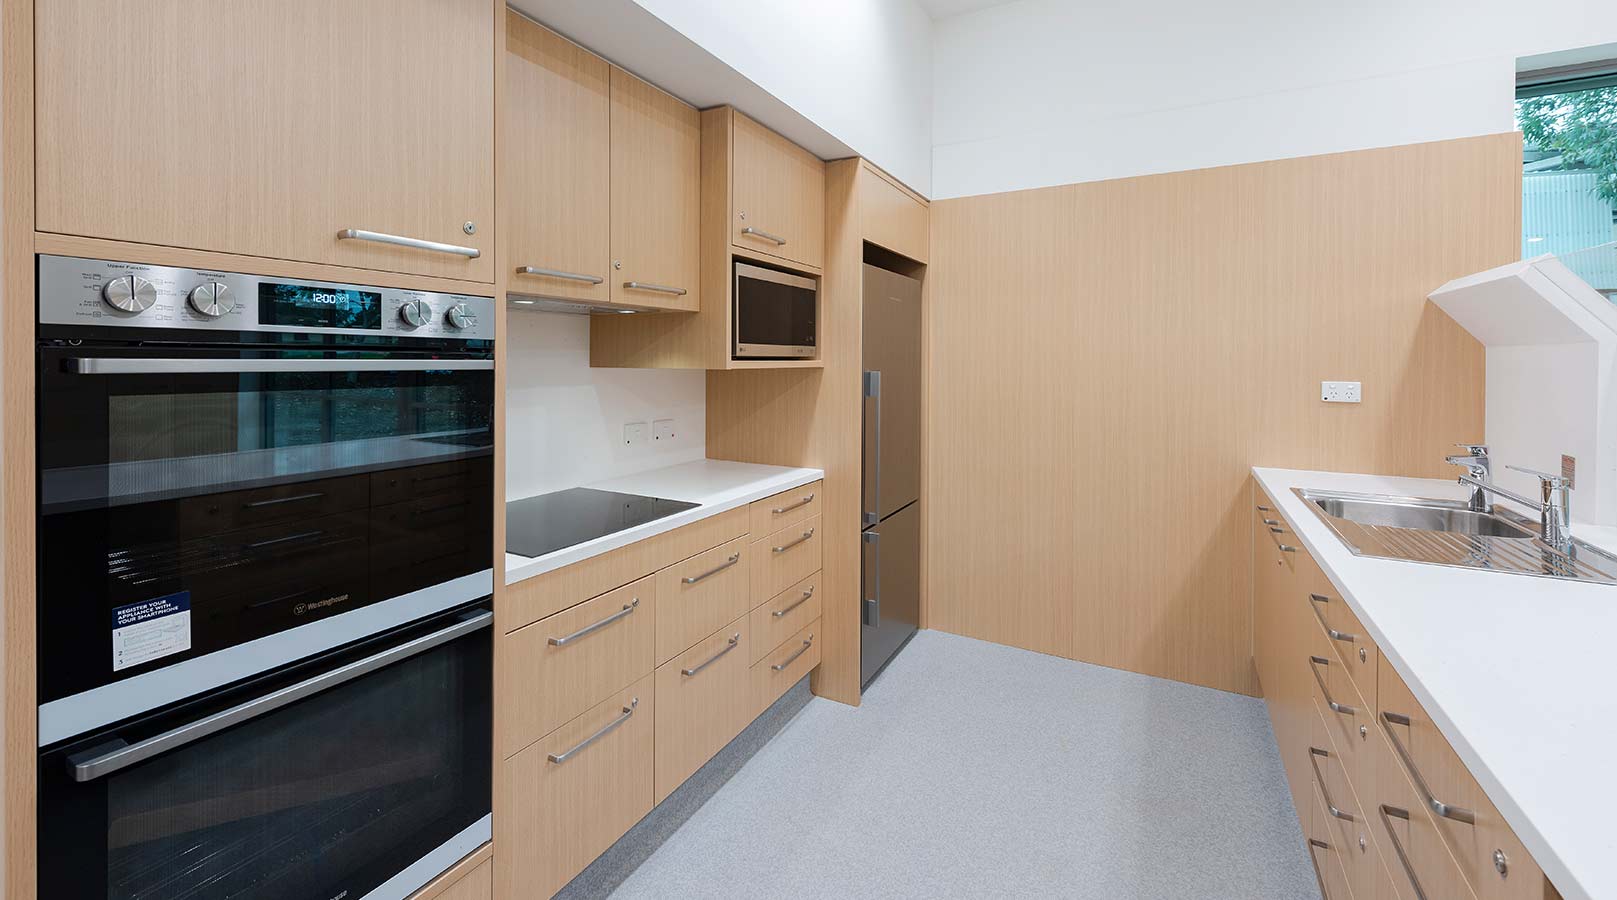 repatriation general hospital adelaide healthcare refurbishment staff kitchen